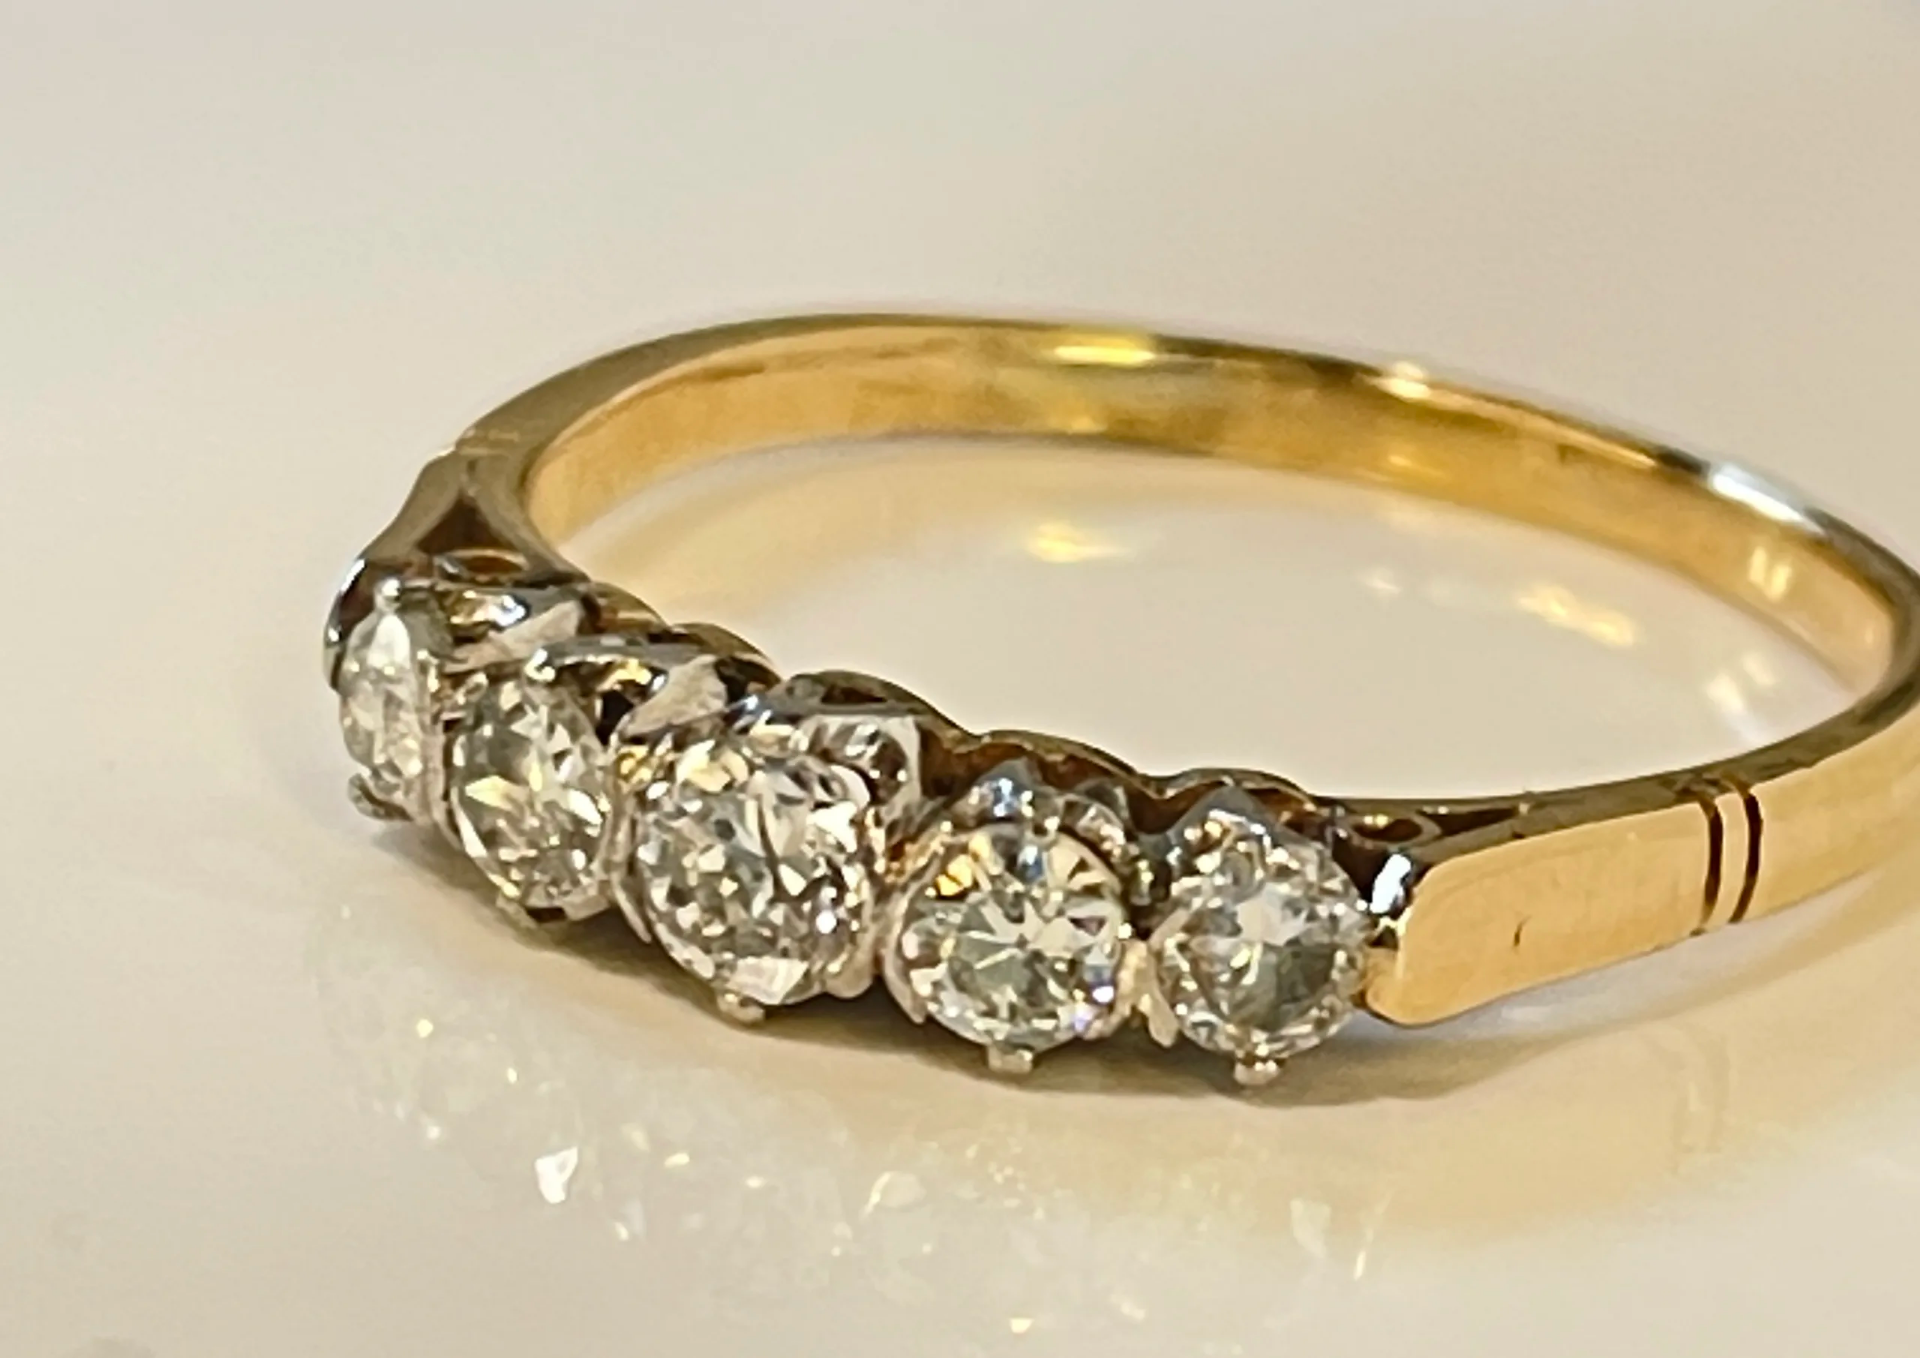 Antique Diamond Ring 14K Yellow Gold approx. 0.24ct Diamonds